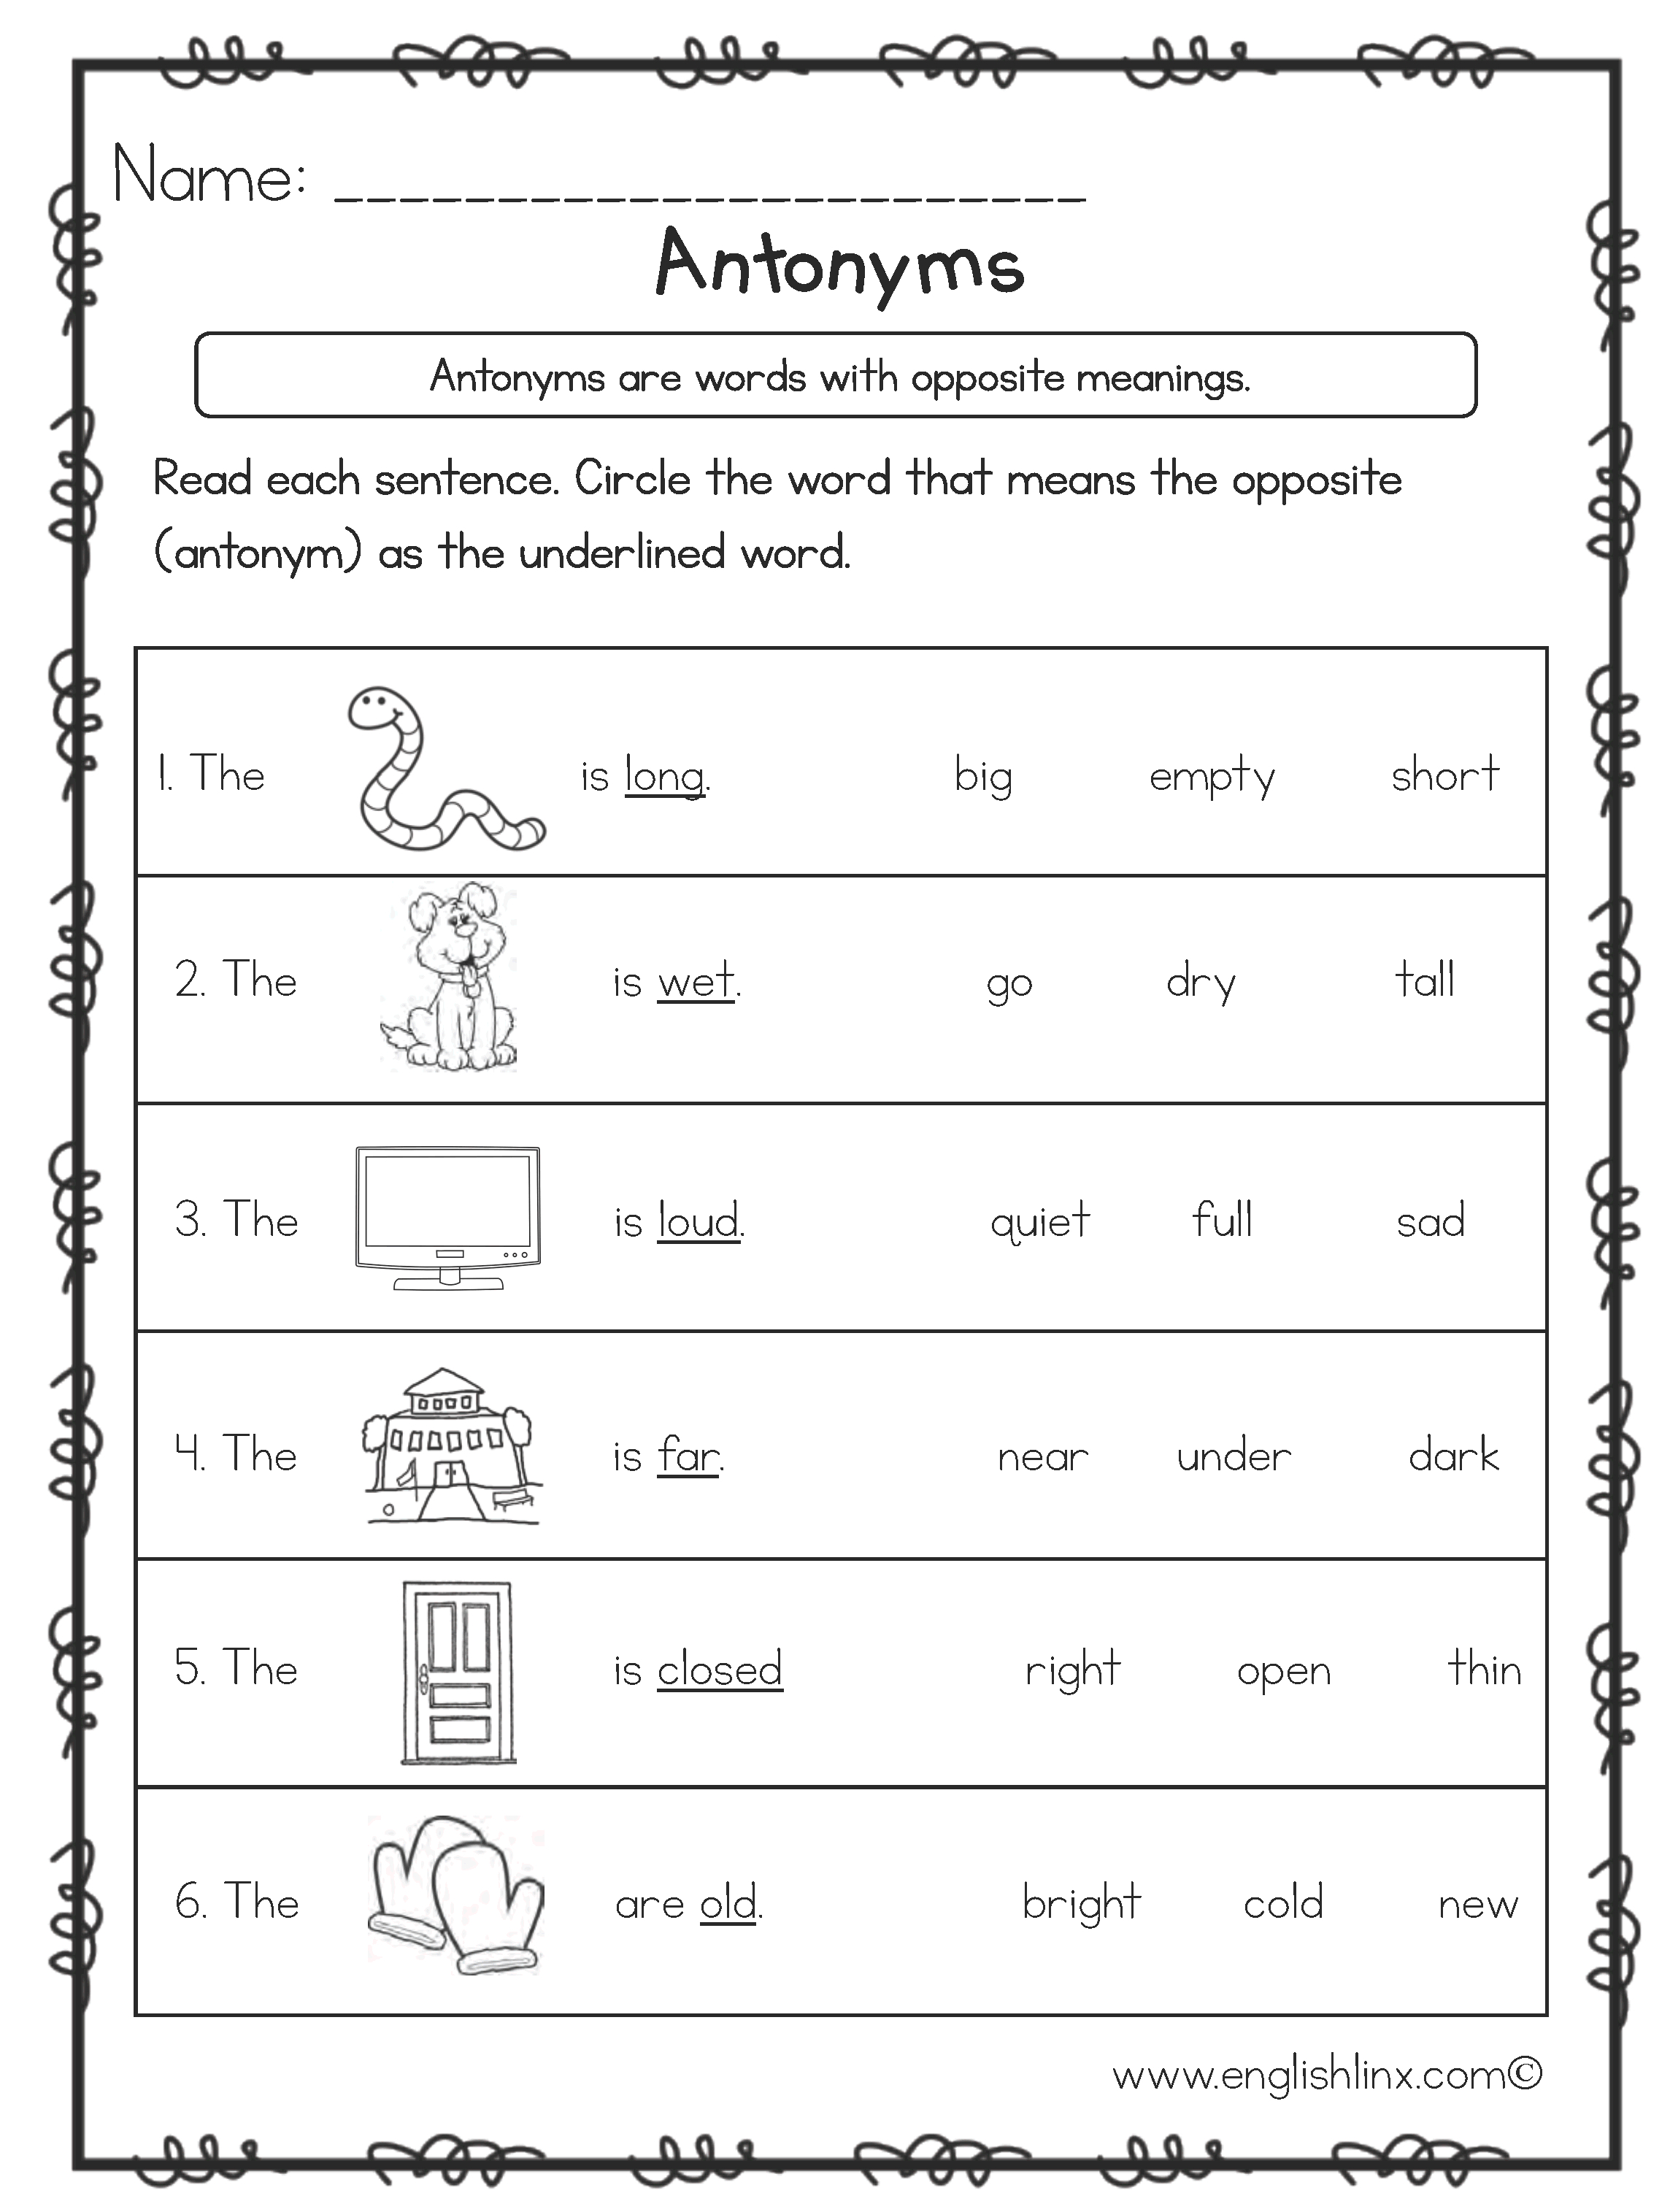 Englishlinx | Antonyms Worksheets | Free Printable Antonym Worksheets